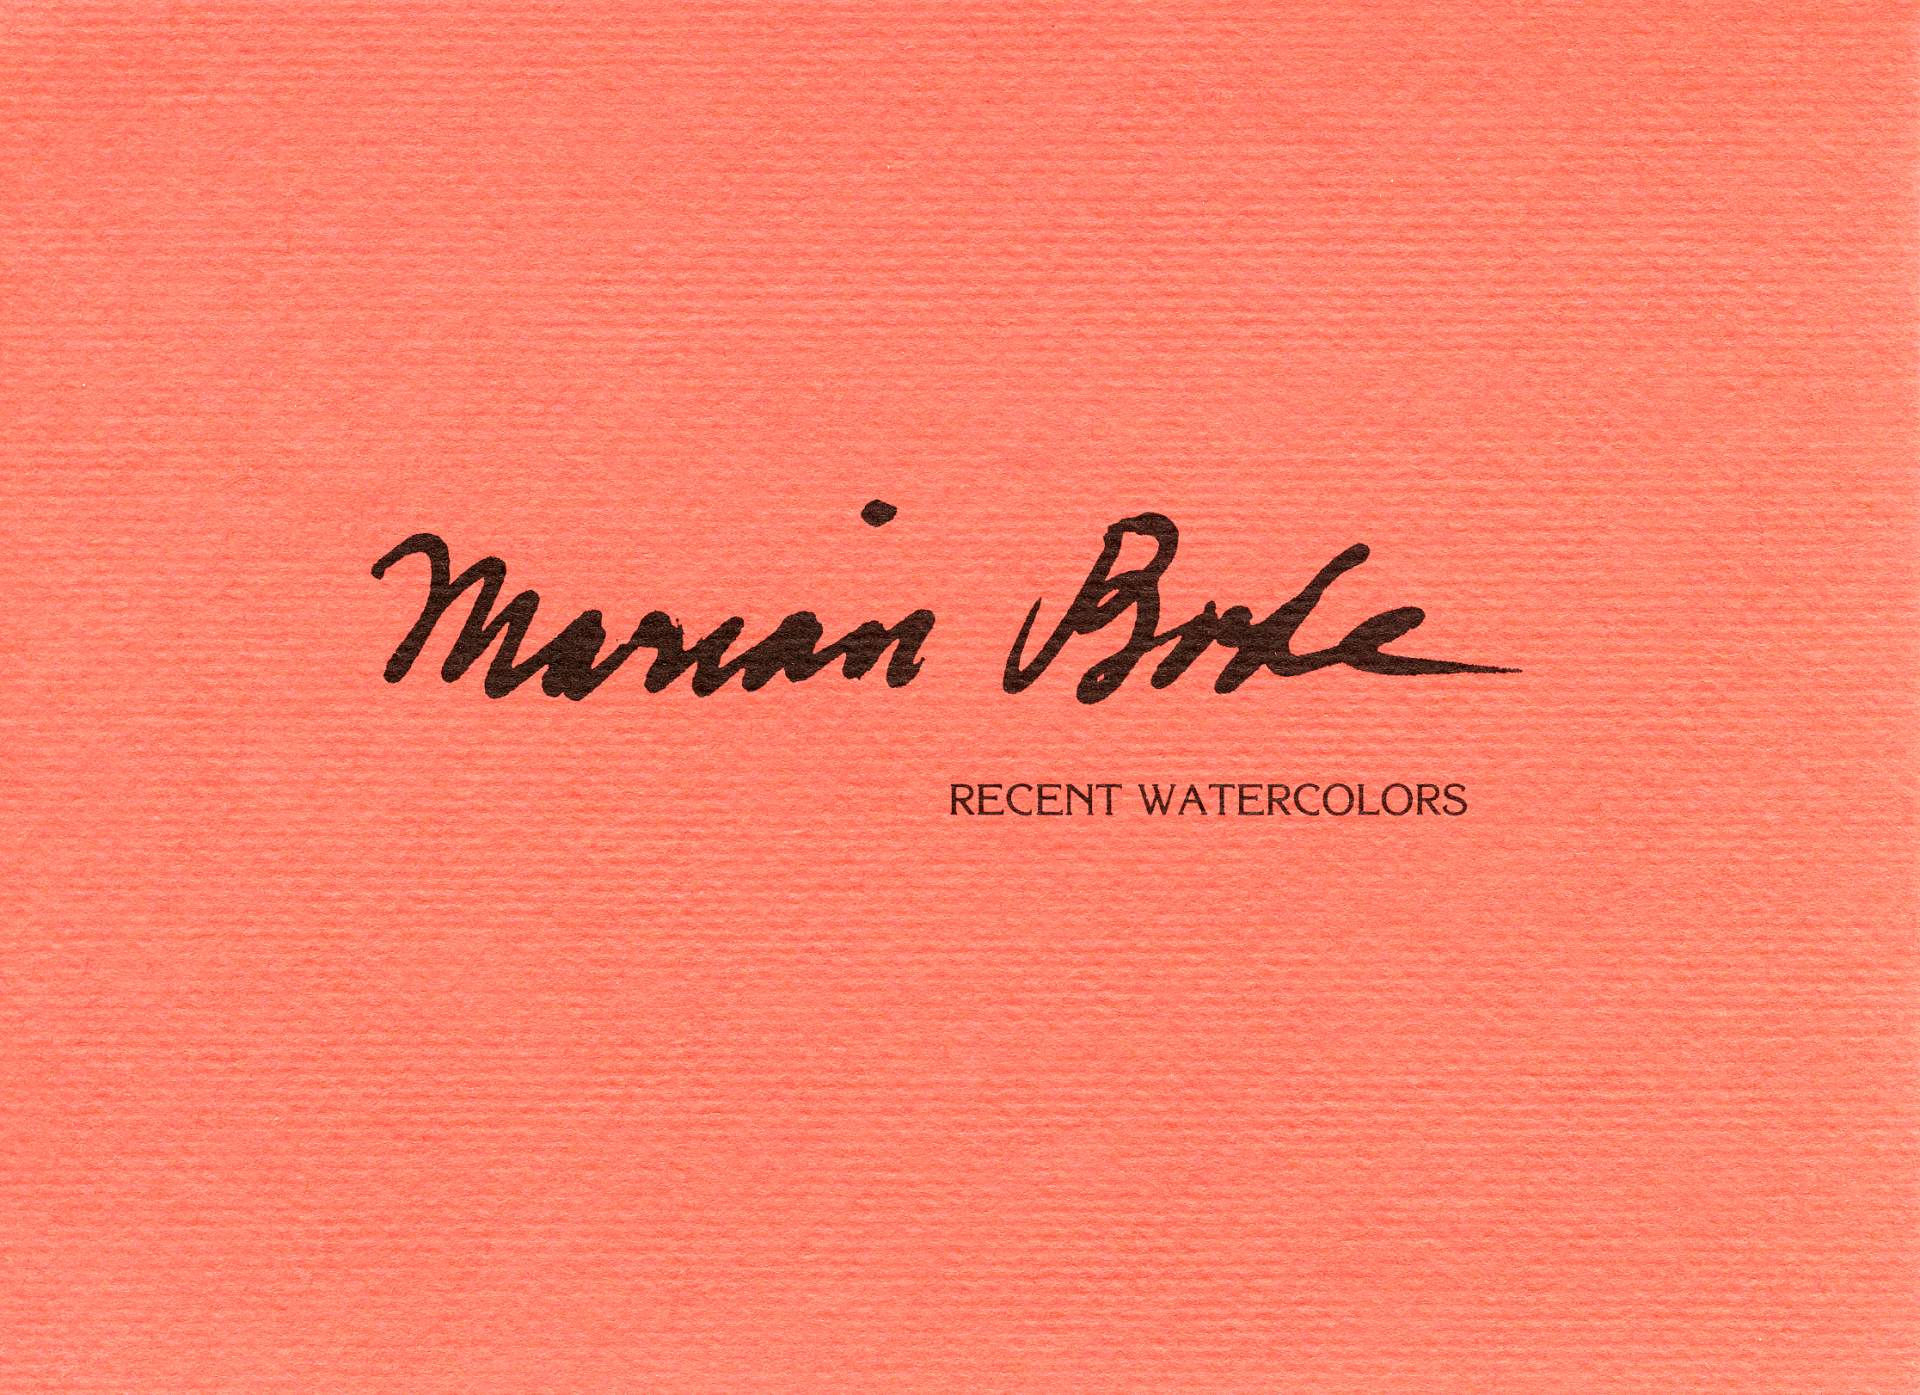 Marian Bode: Recent Watercolors exhibition postcard